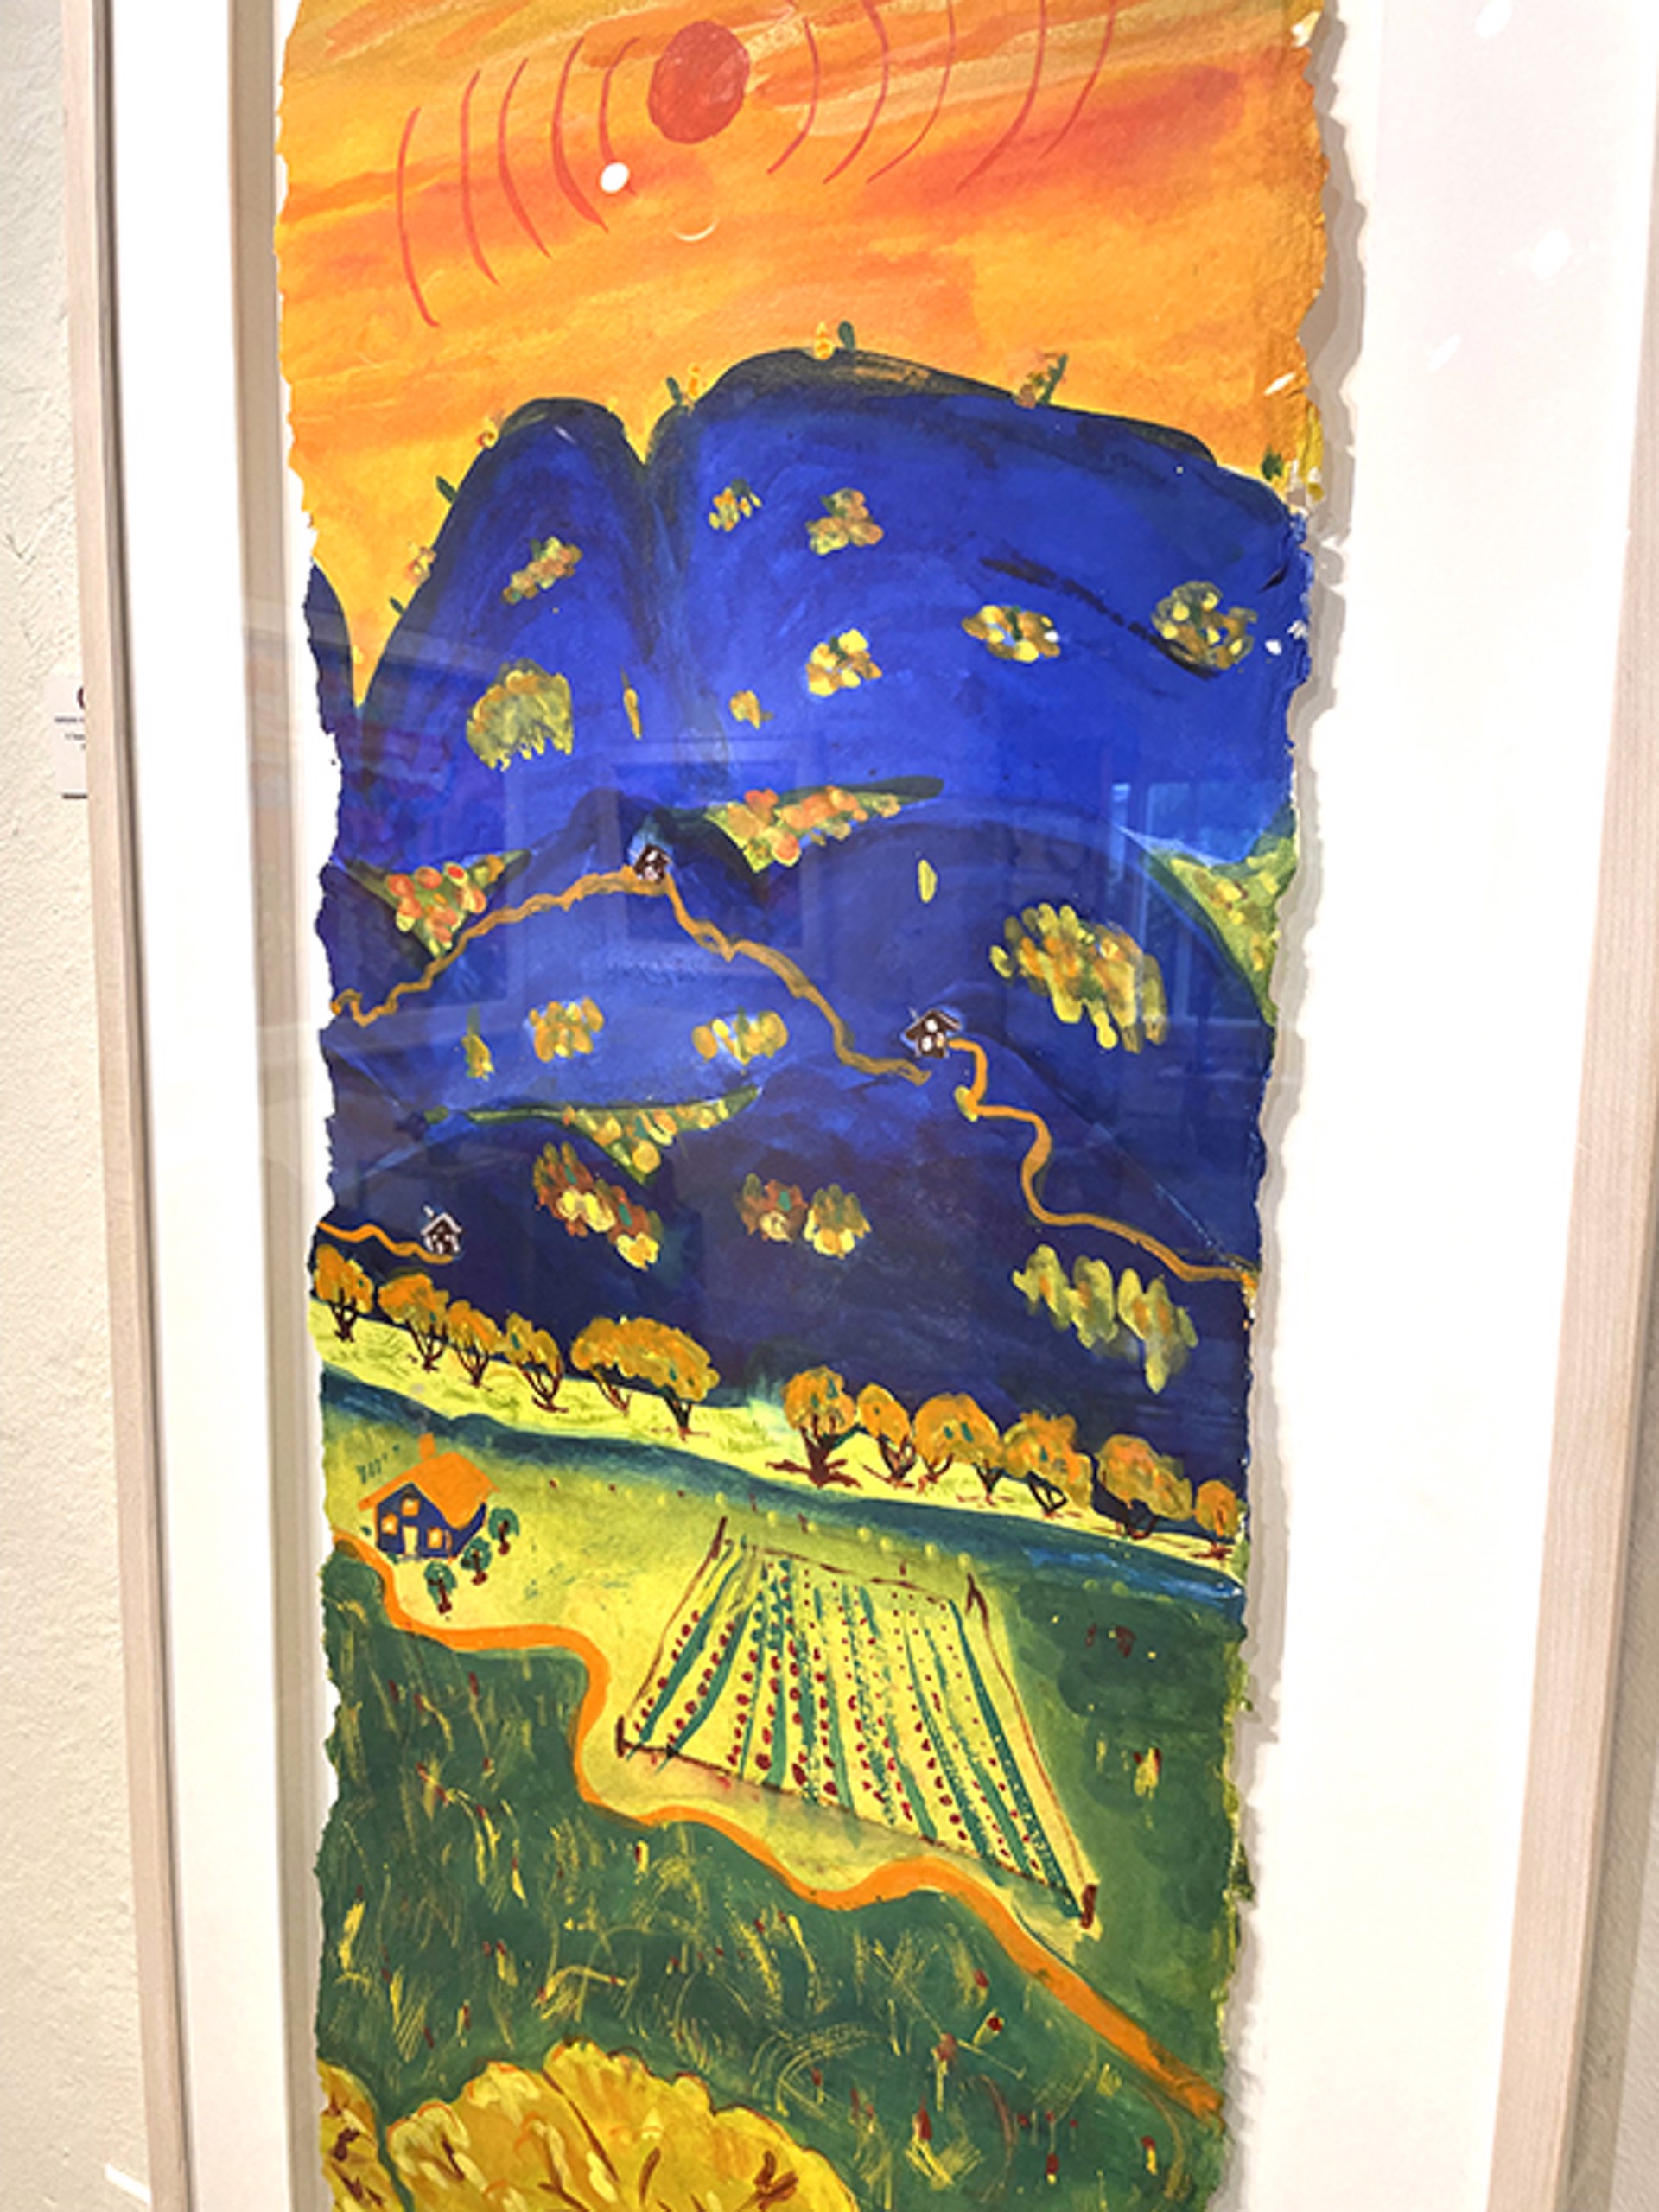 A Sunny Day in Santa Fe (54.5" x 24.75" framed) by Phyllis Kapp